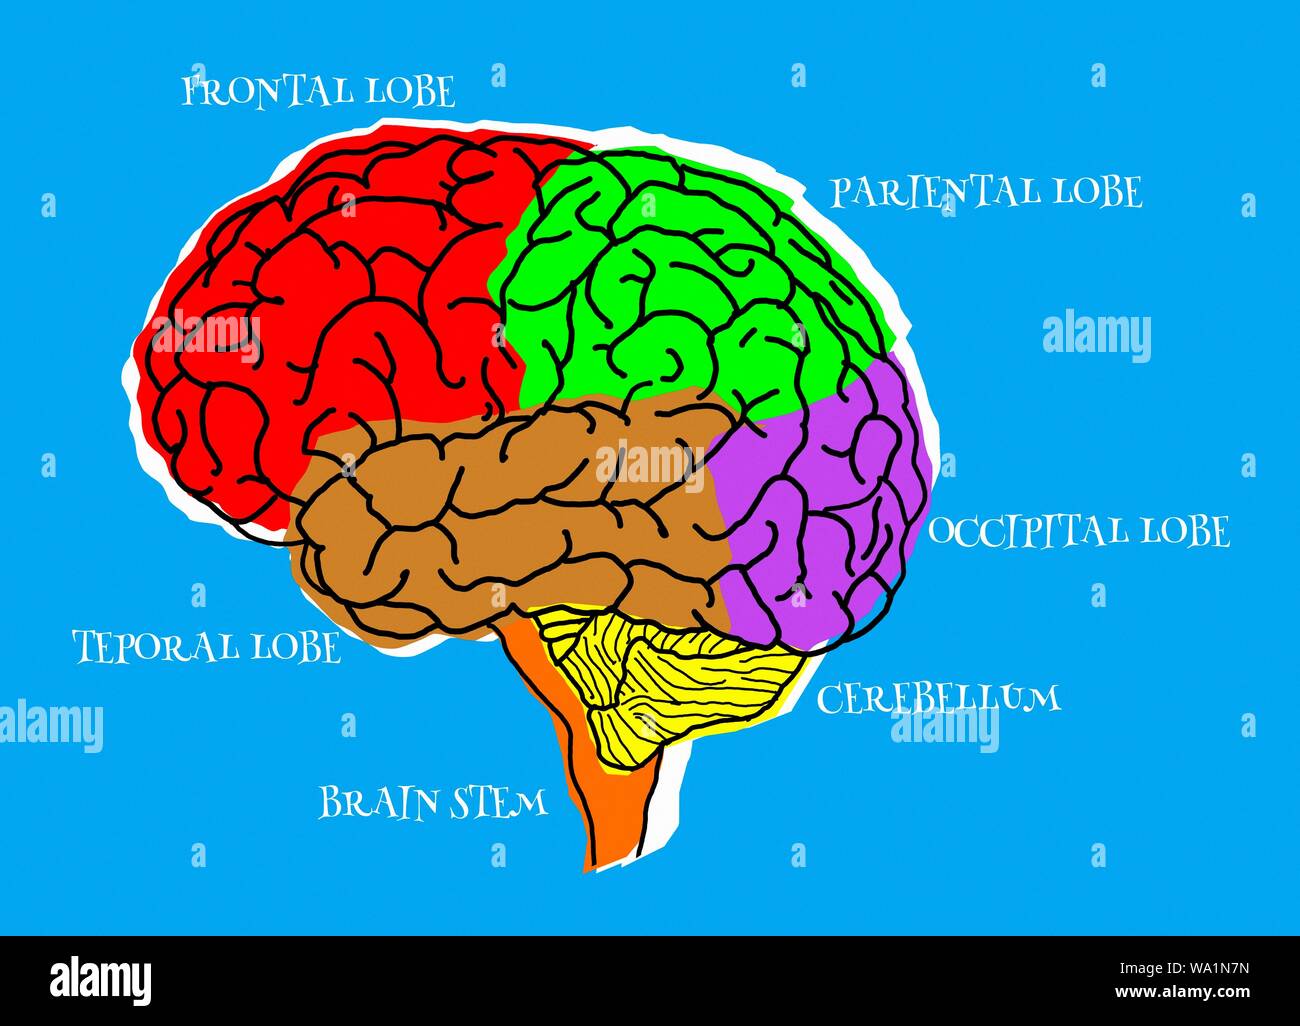 Lobes of the human brain, illustration. Stock Photo